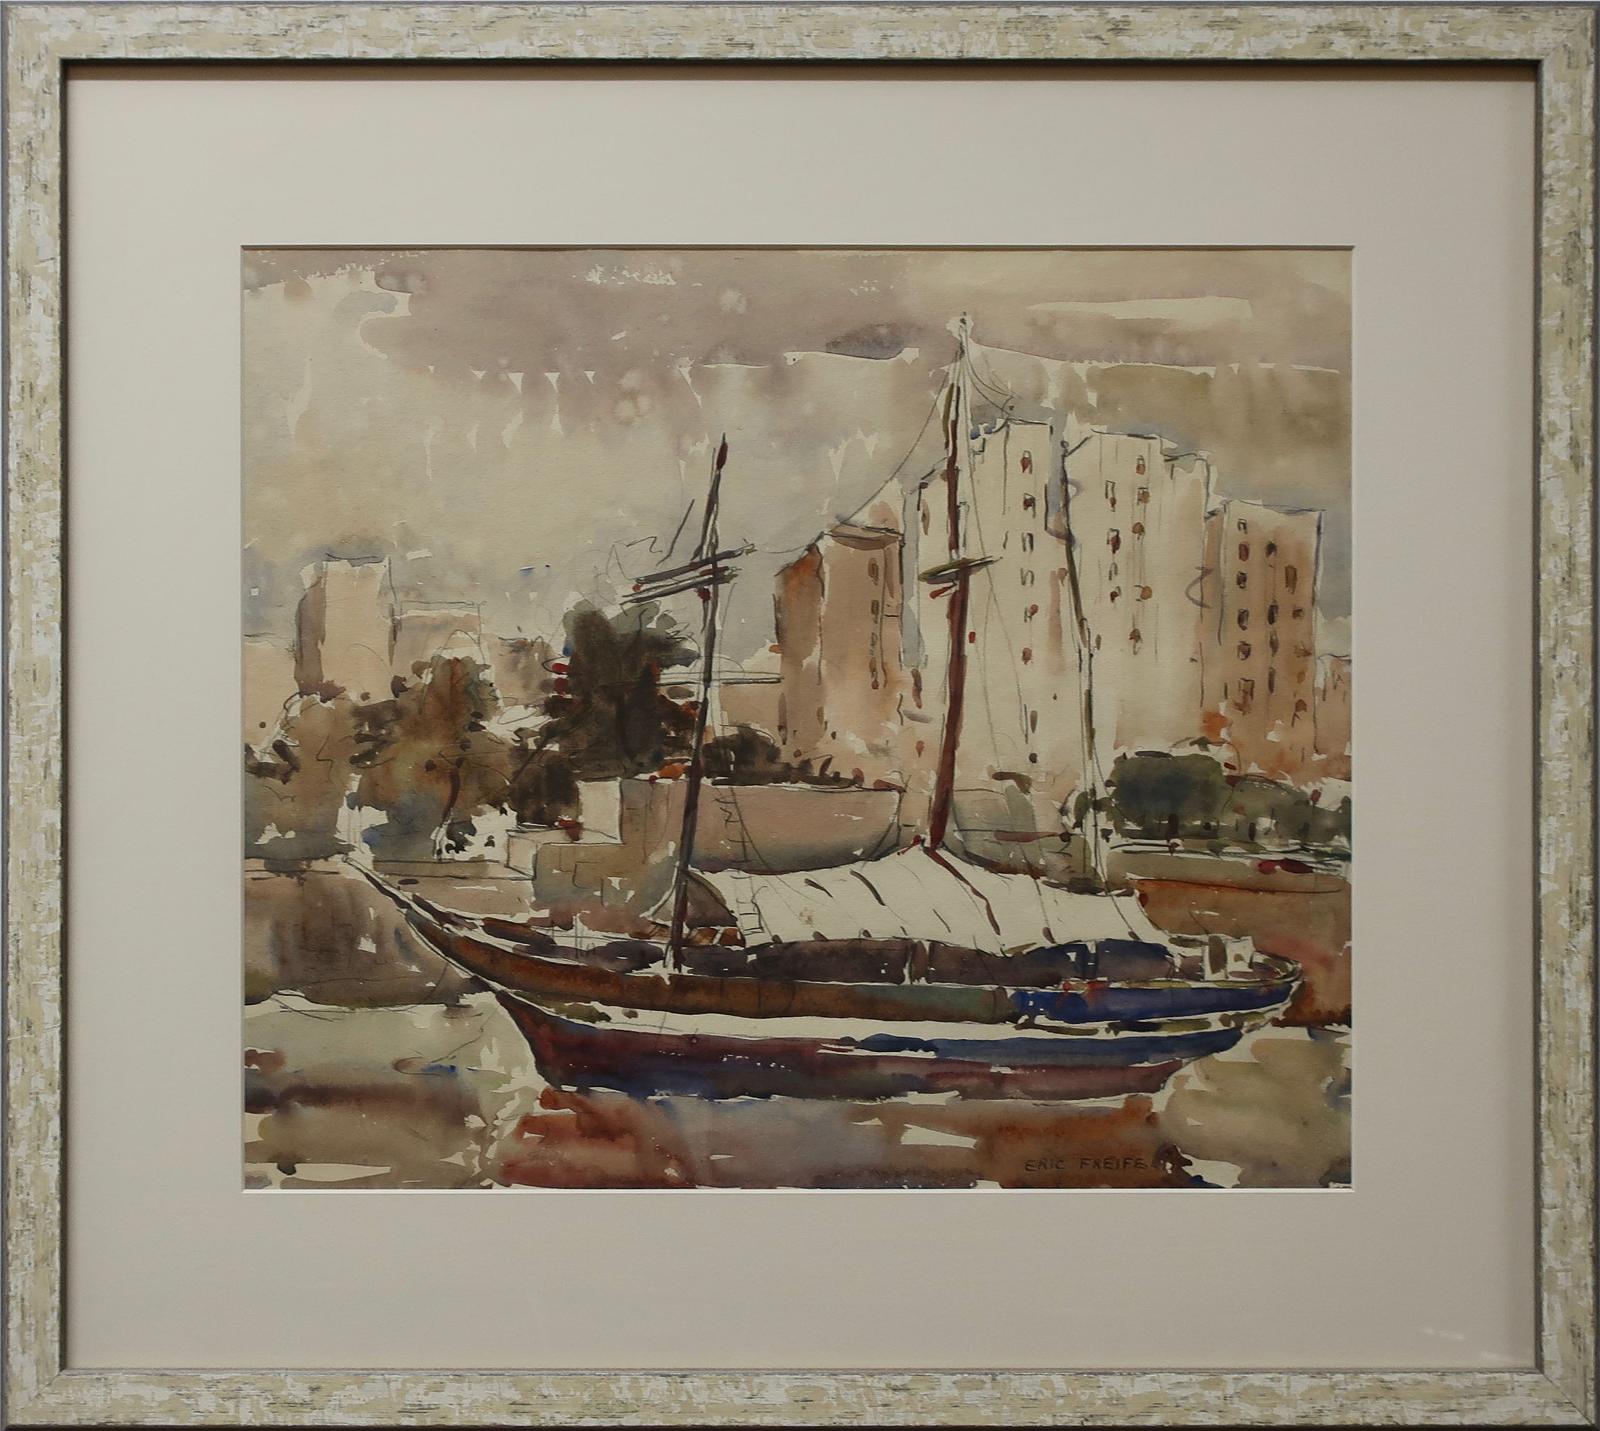 Eric Freifeld (1919-1984) - Untitled (Boat At Rest)